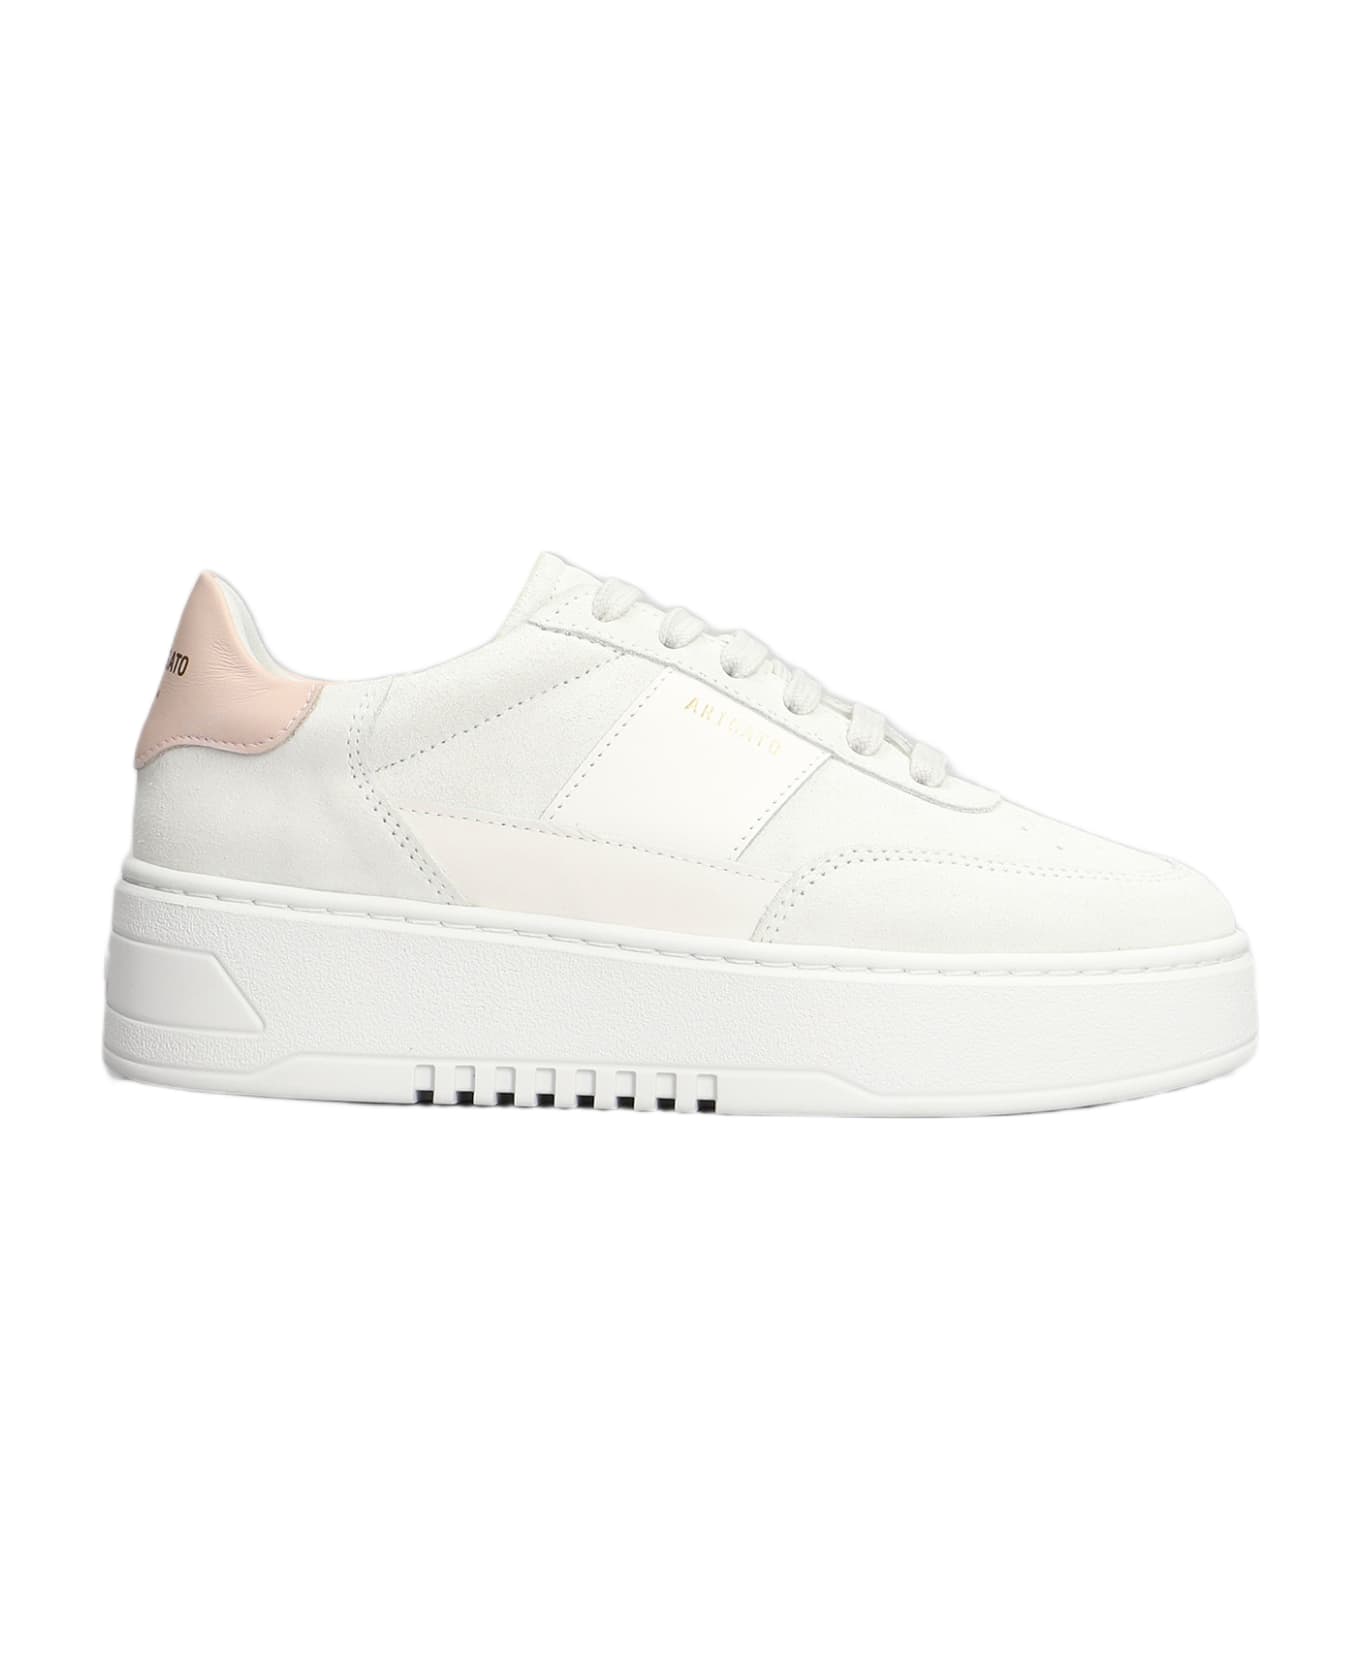 Axel Arigato Orbit Vintage Sneakers In White Suede - white ウェッジシューズ